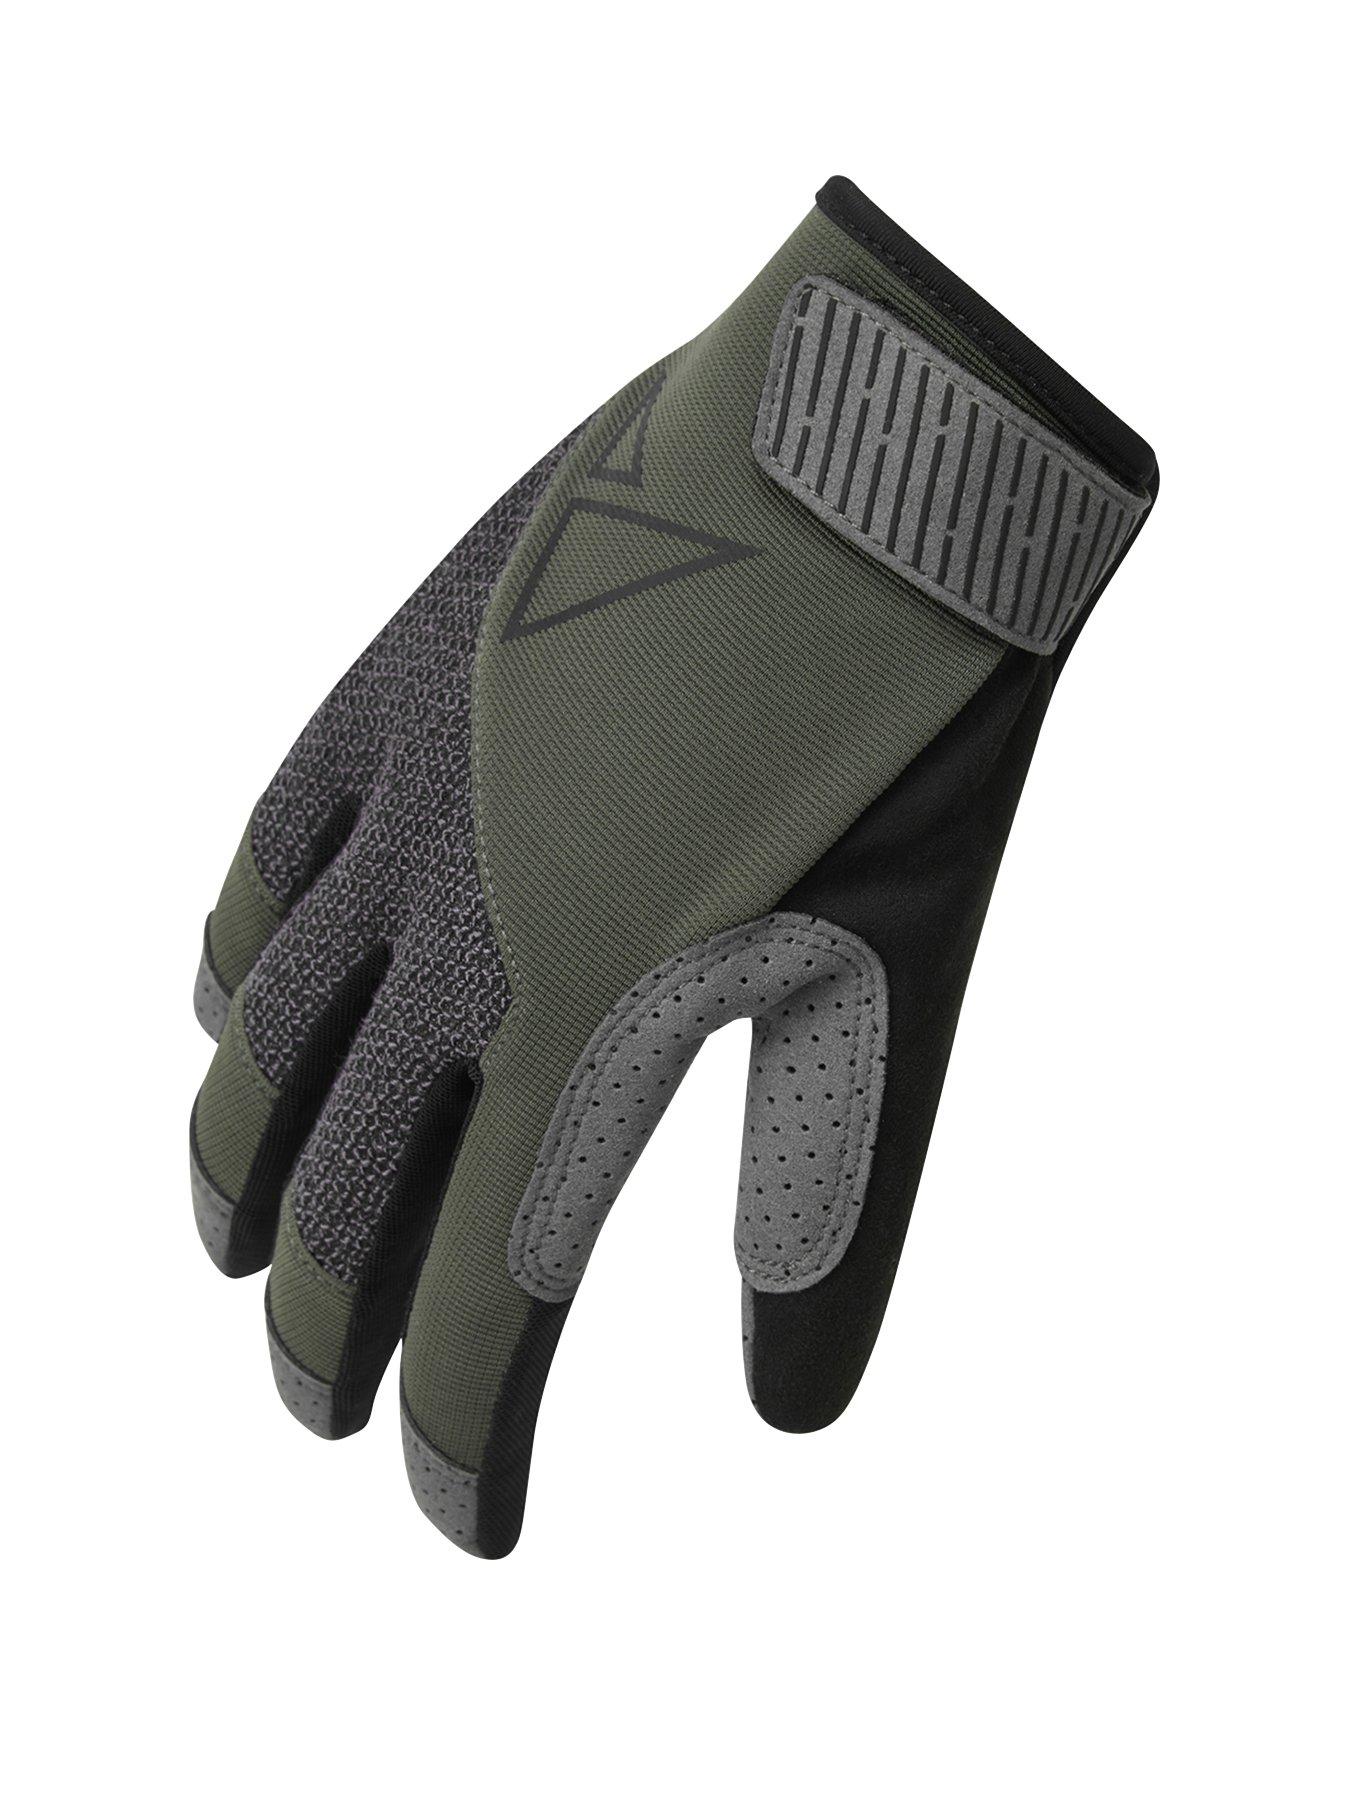 Aero Tech Gel Padded Leather Cotton Crochet Fingerless Cycling Gloves